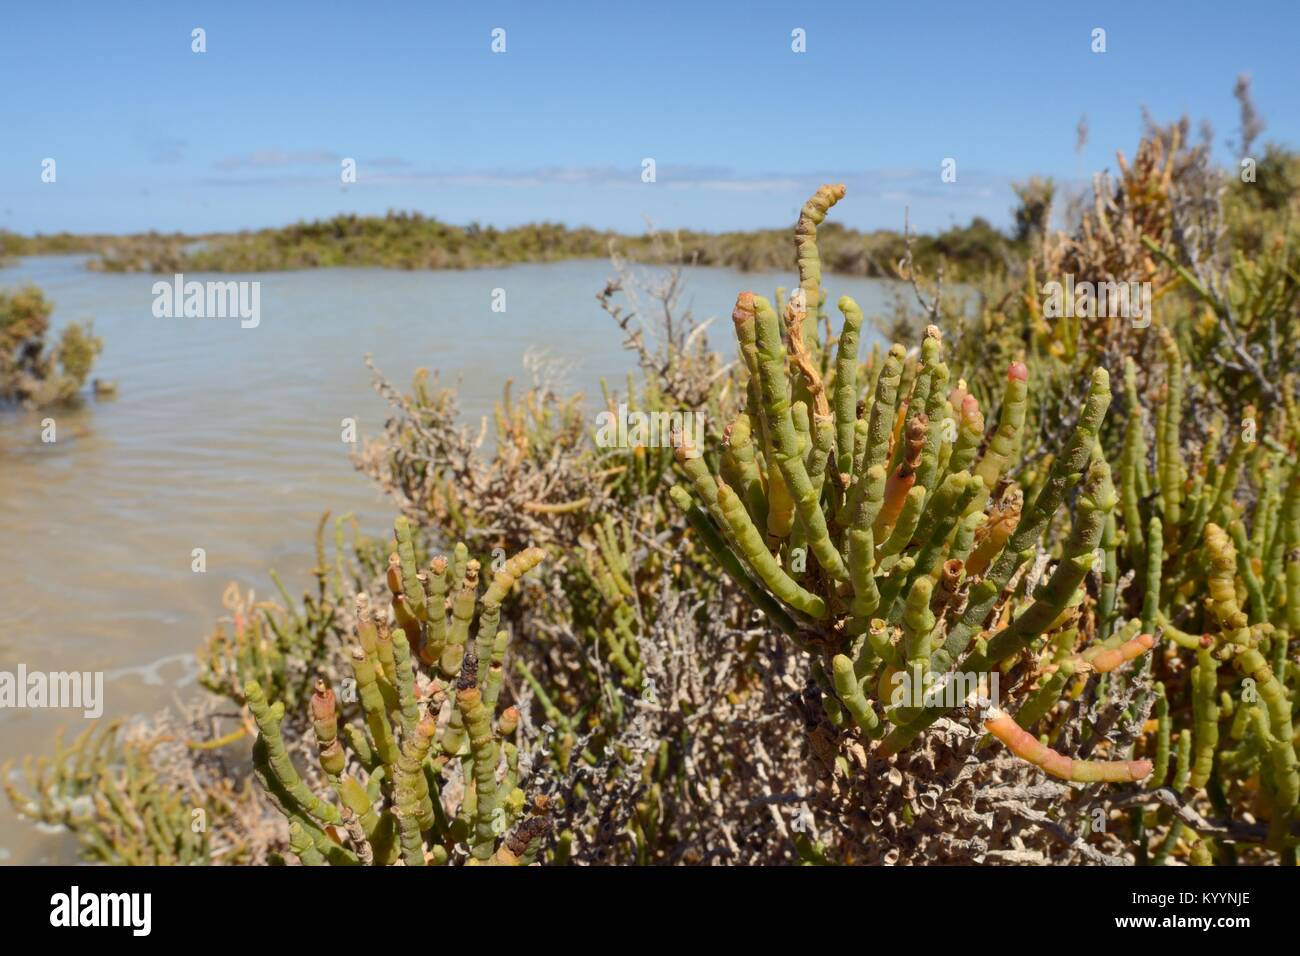 Glaucas glasswort (Arthrocnemum macrostachyum / glaucum) arbustos parcialmente sumergidos por una marea alta en una laguna costera, Sotavento, Fuerteventura. Foto de stock